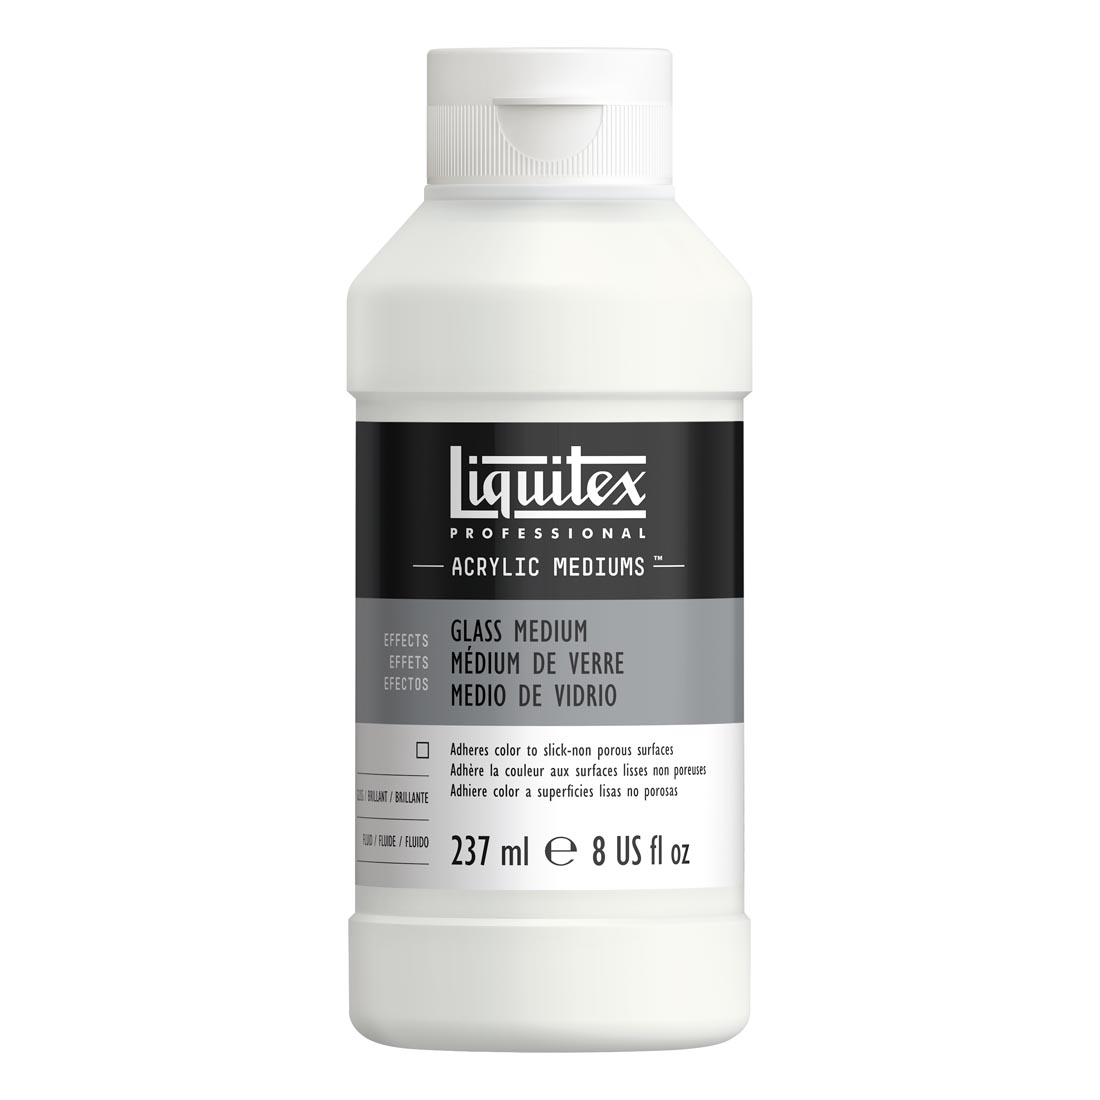 8 oz. bottle of Liquitex Glass Medium